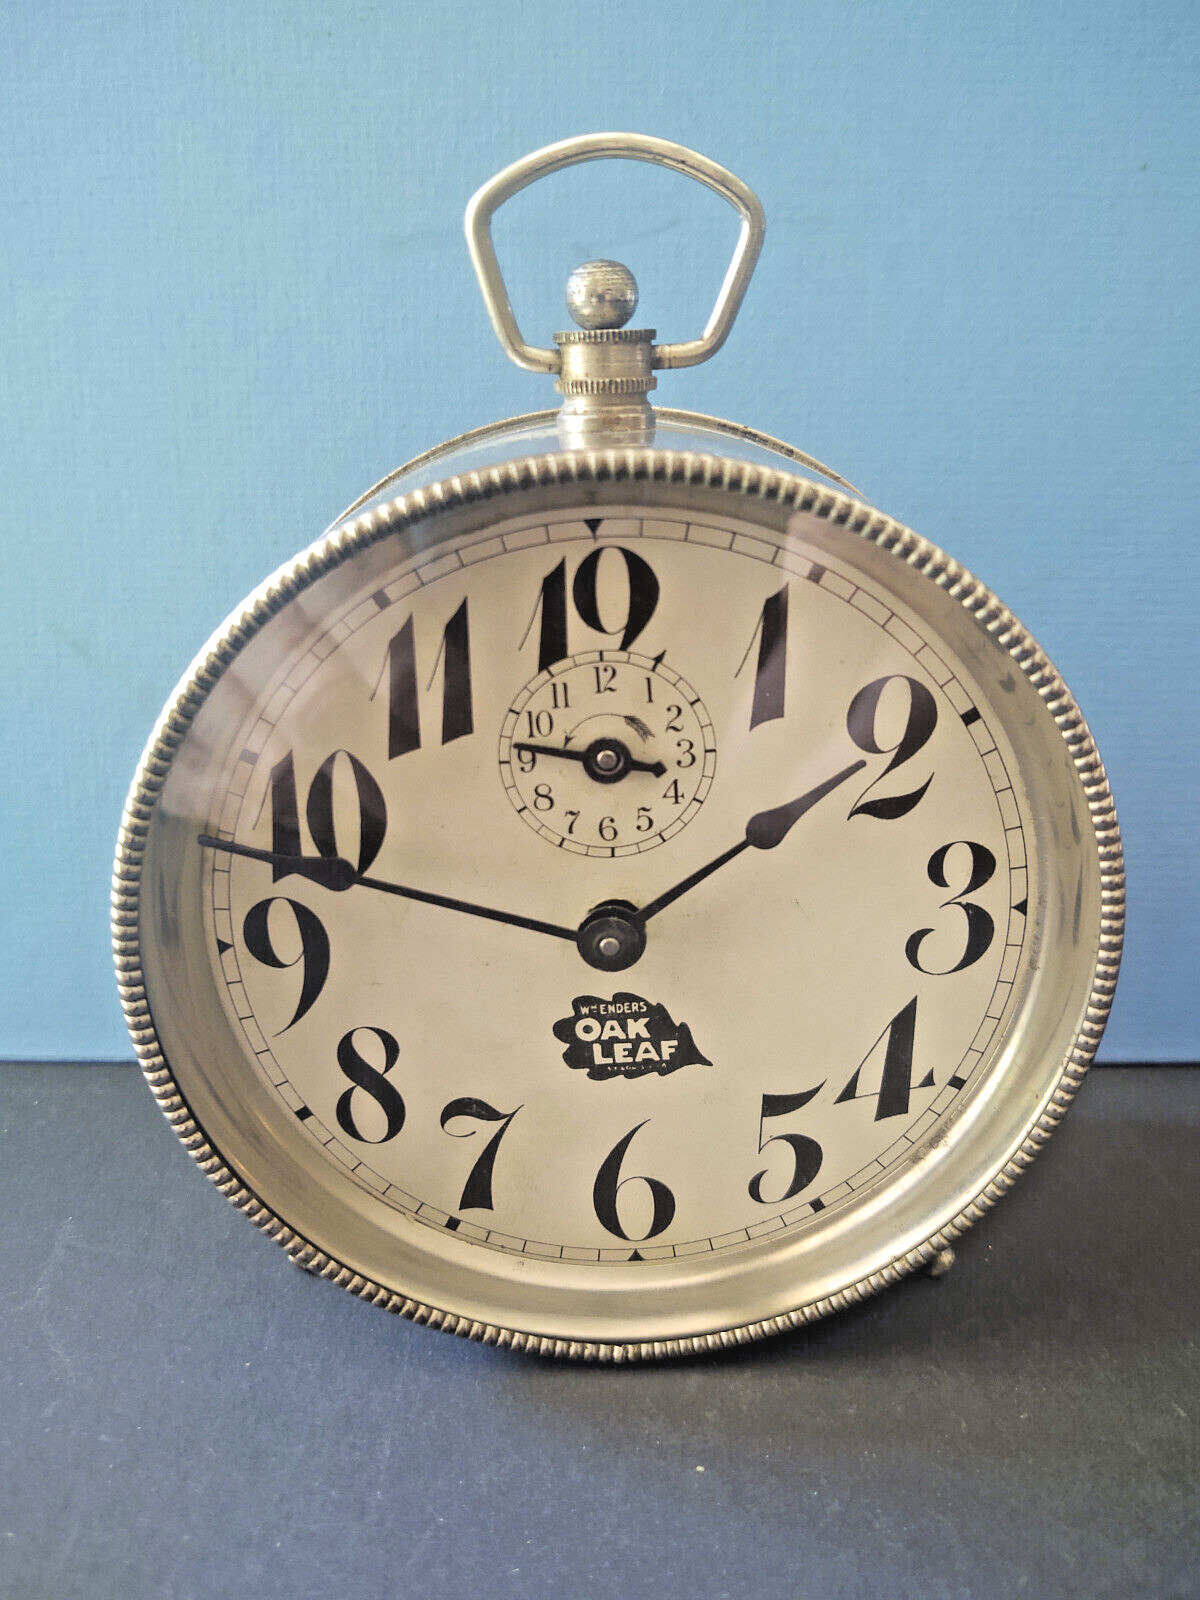 Antique Wm. Enders Oak Leaf Advertising Peg-Leg “Tin-Can” Alarm Clock, Runs Well